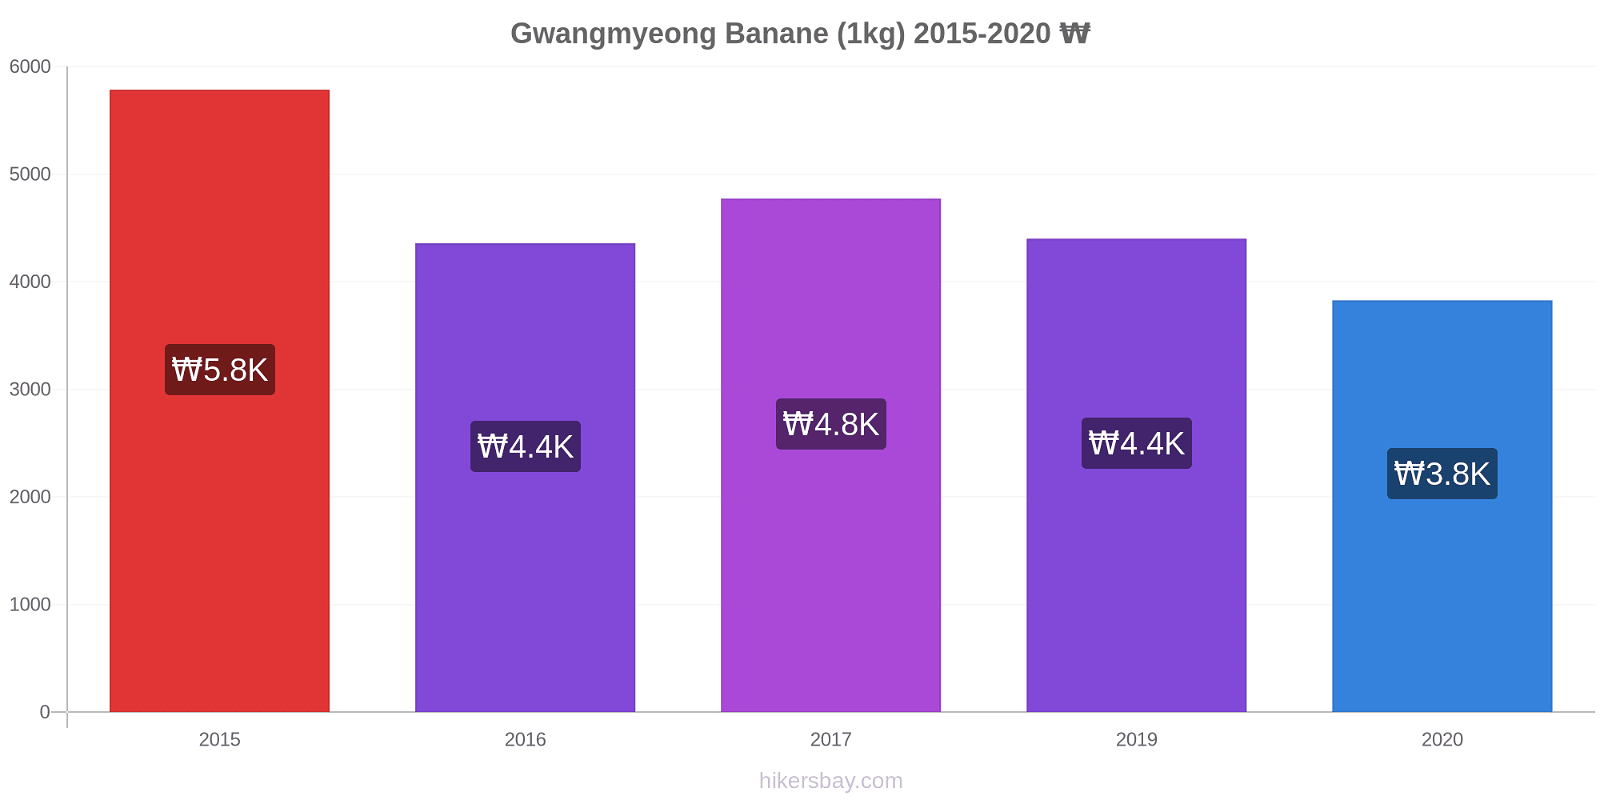 Gwangmyeong variazioni di prezzo Banana (1kg) hikersbay.com